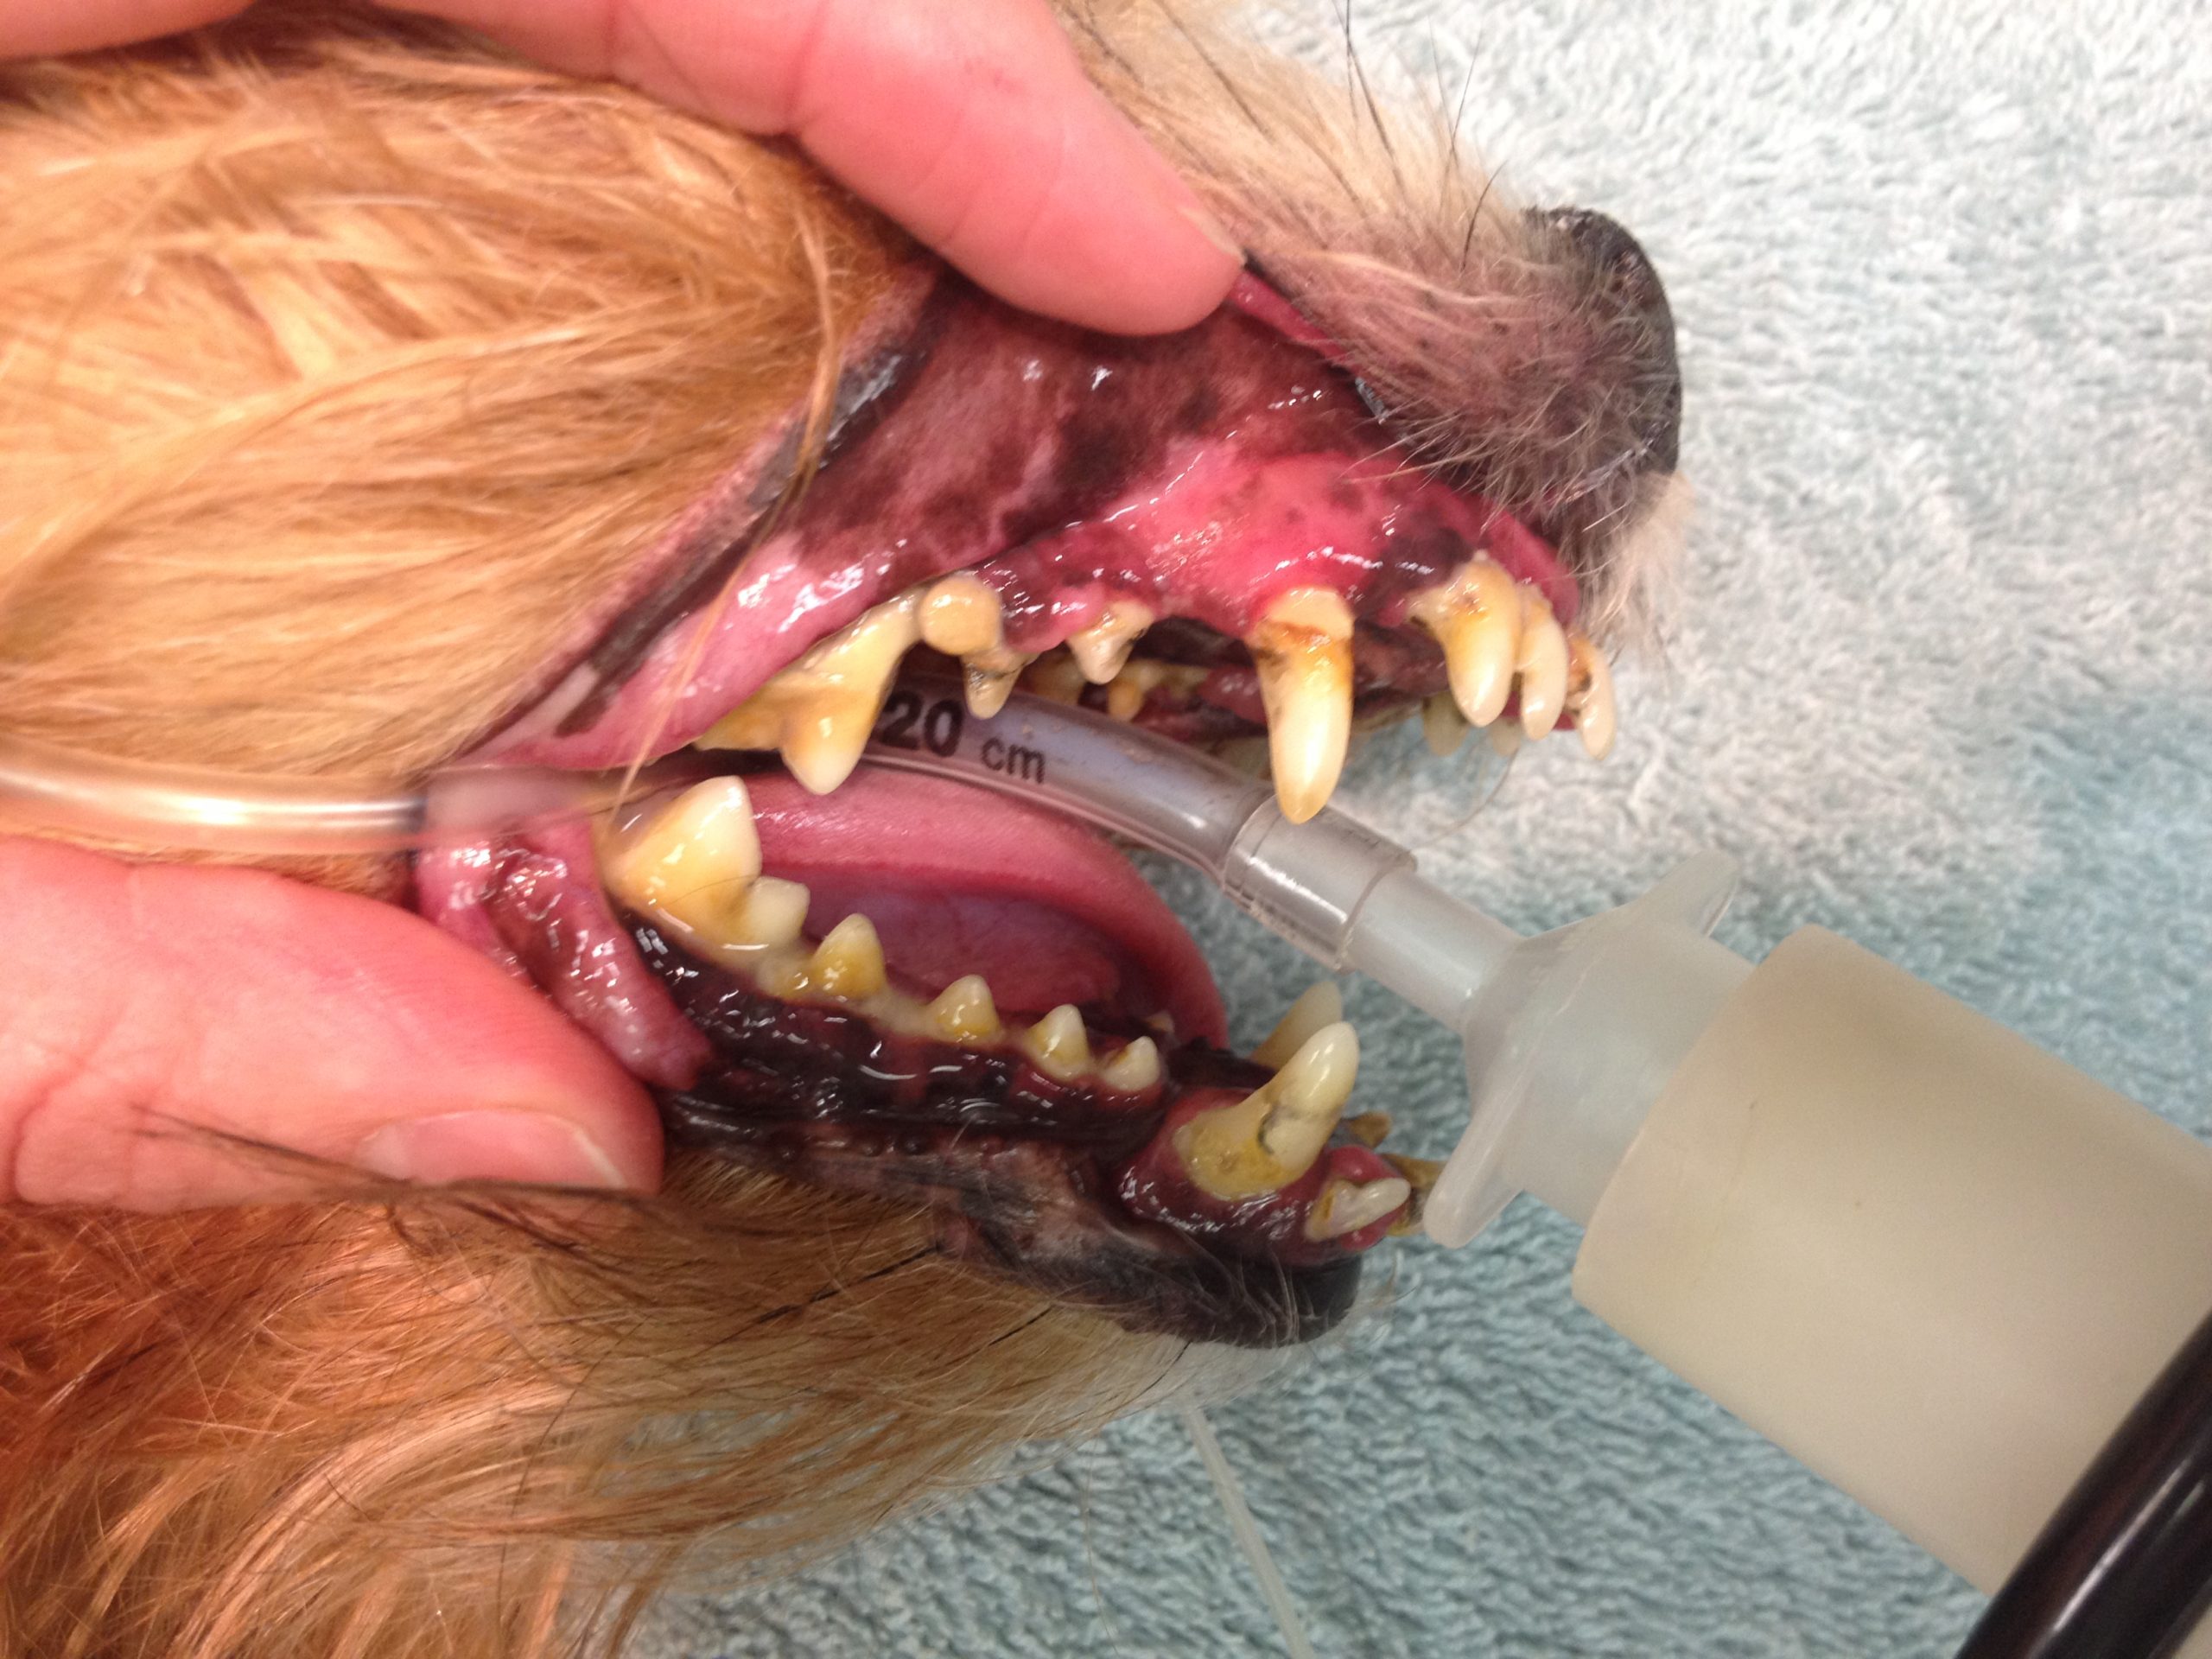 Dental health for pets